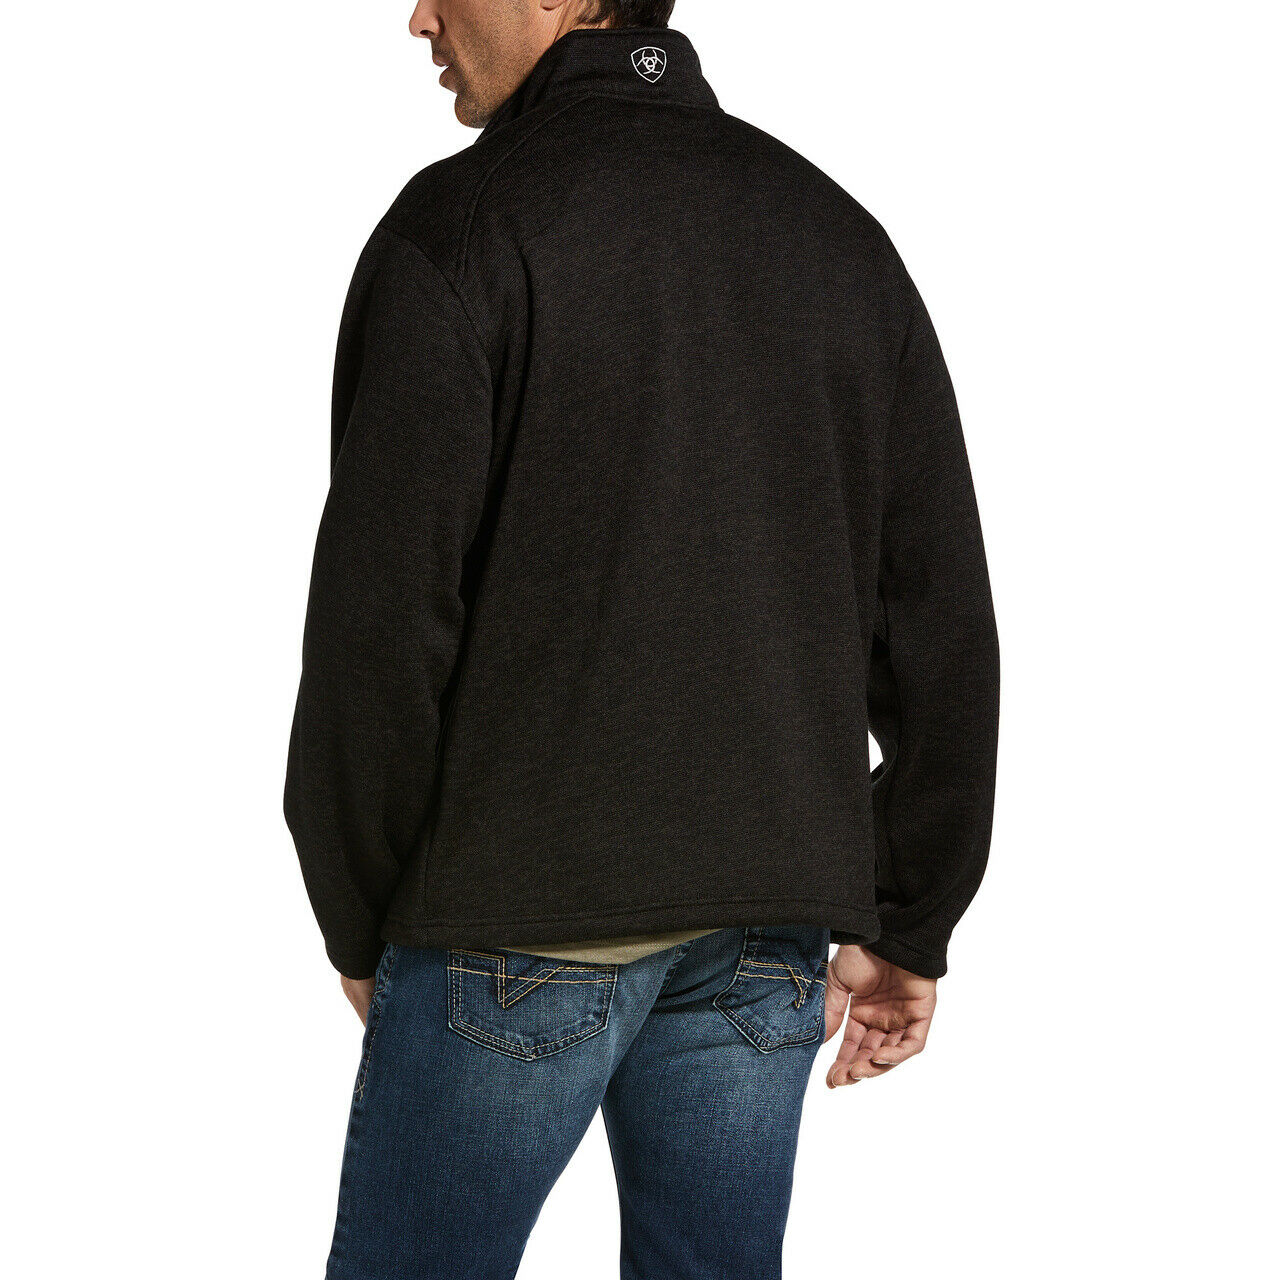 Ariat® Men's Charcoal Caldwell Full Zip Sweater Jacket 10032951